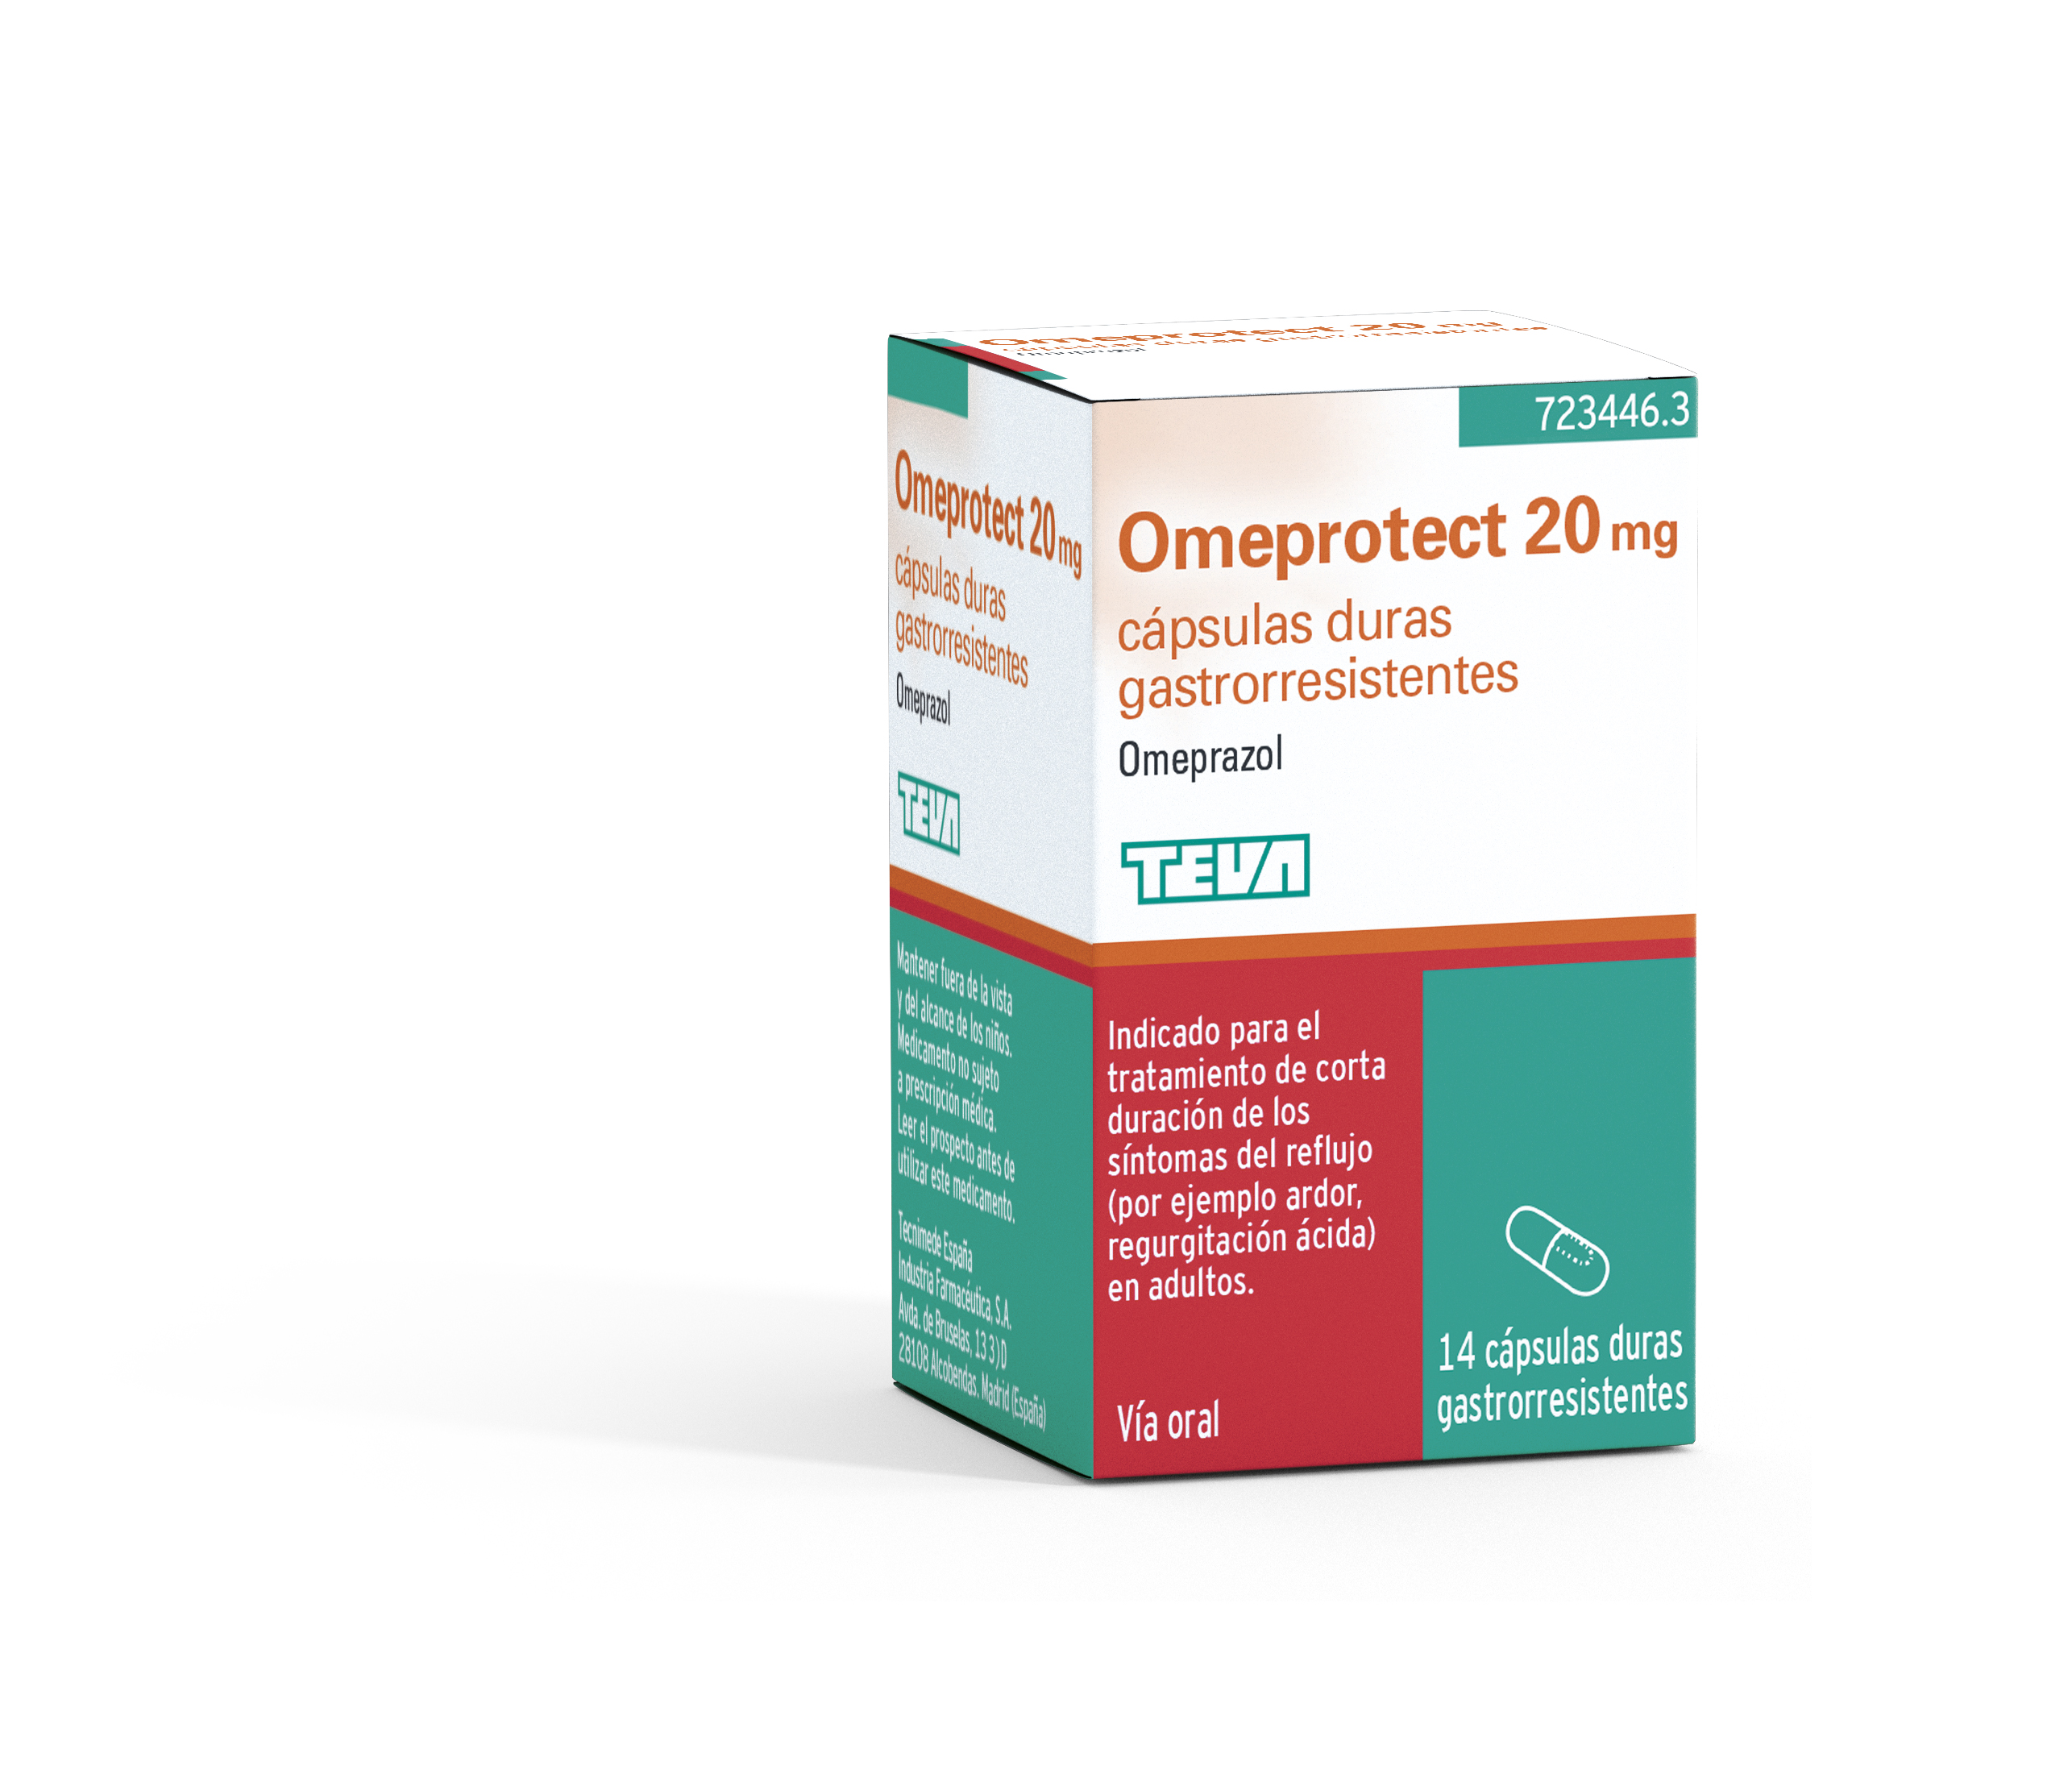 OMEPROTECT 20 mg CAPSULAS DURAS GASTRORRESISTENTES, 14 cápsulas frasco